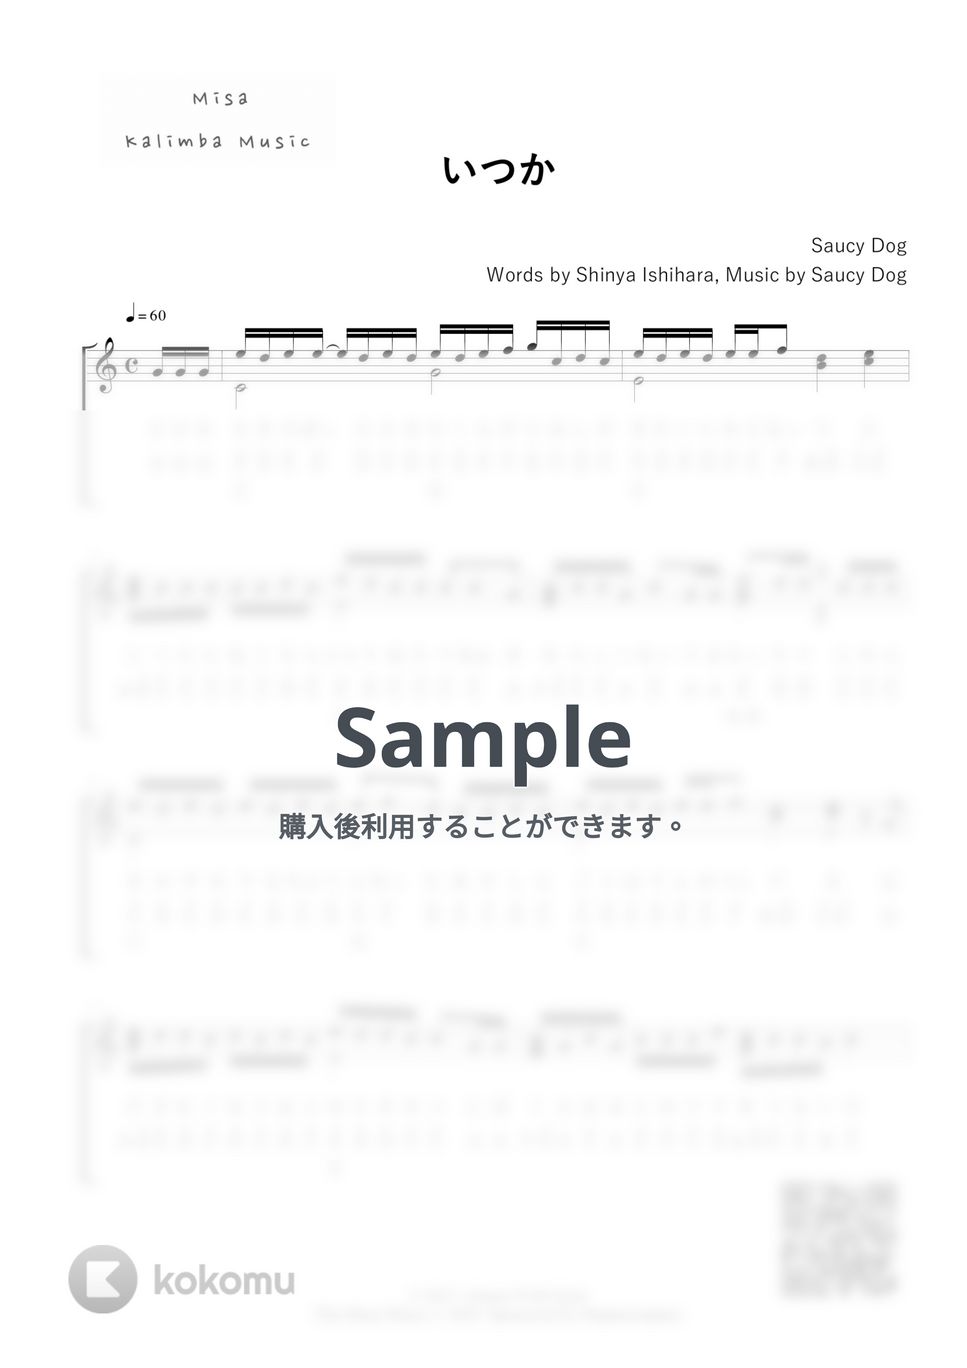 Saucy Dog - いつか / 17音カリンバ / 英音名表記 (歌詞付き/ 模範演奏付き) by Misa / Kalimba Music